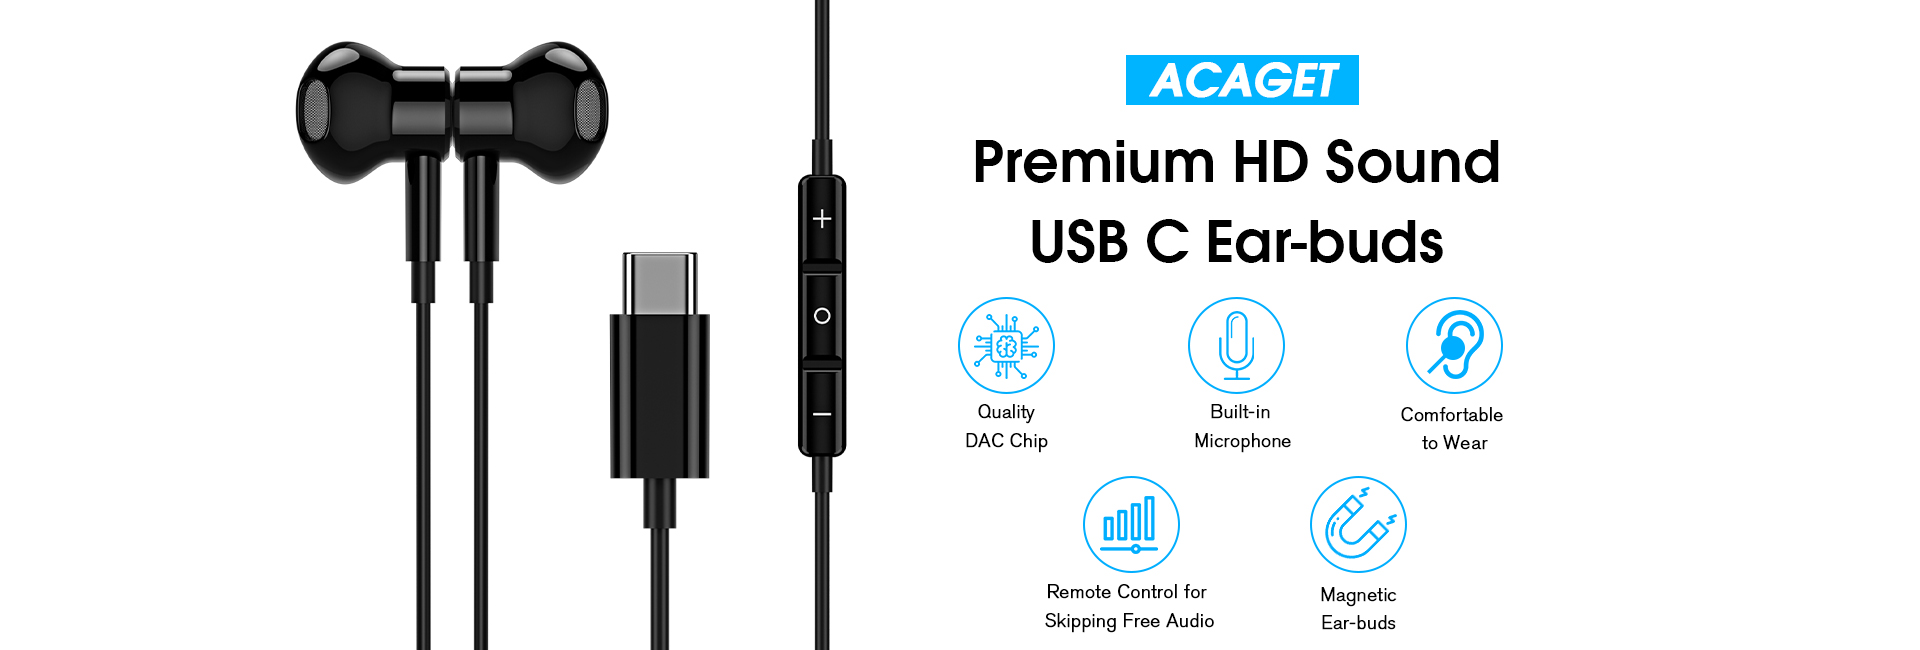 ACAGET USB C Headphones, Galaxy S21 Ultra Earbuds Wired Earphone